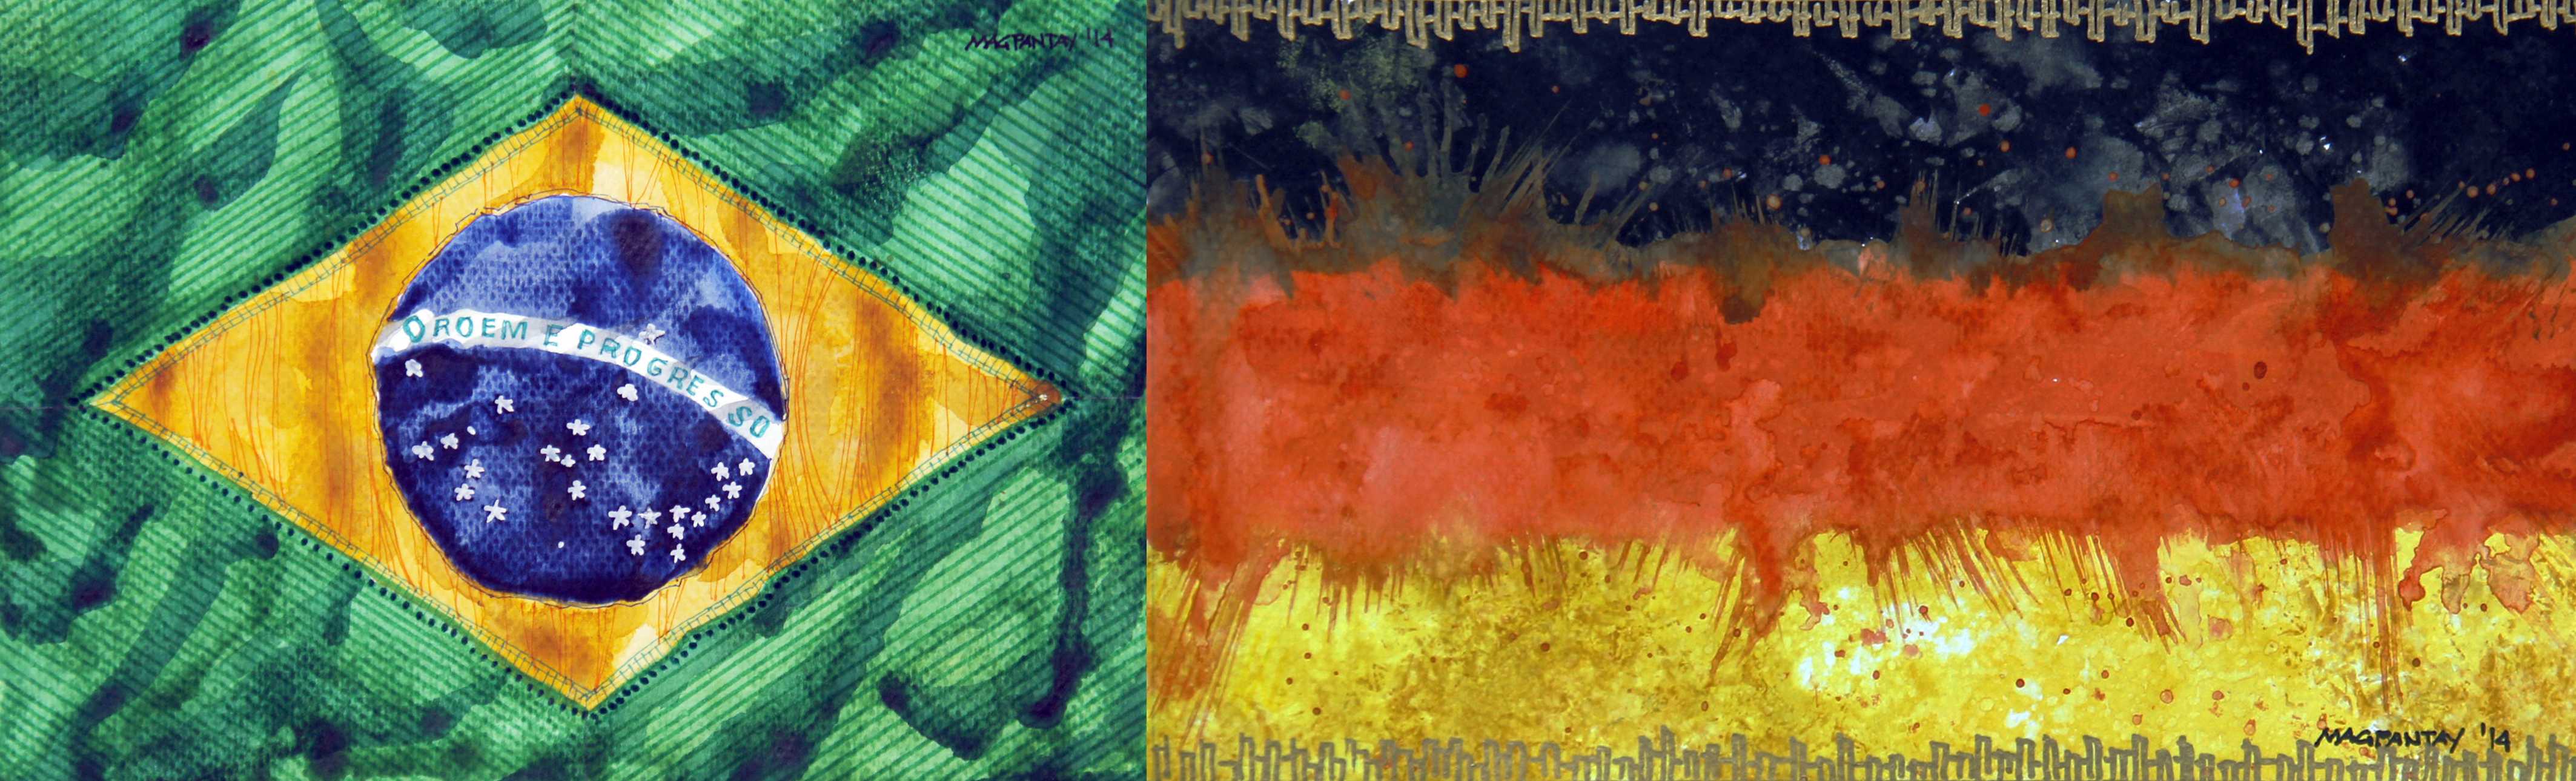 Brasilien Vs Deutschland